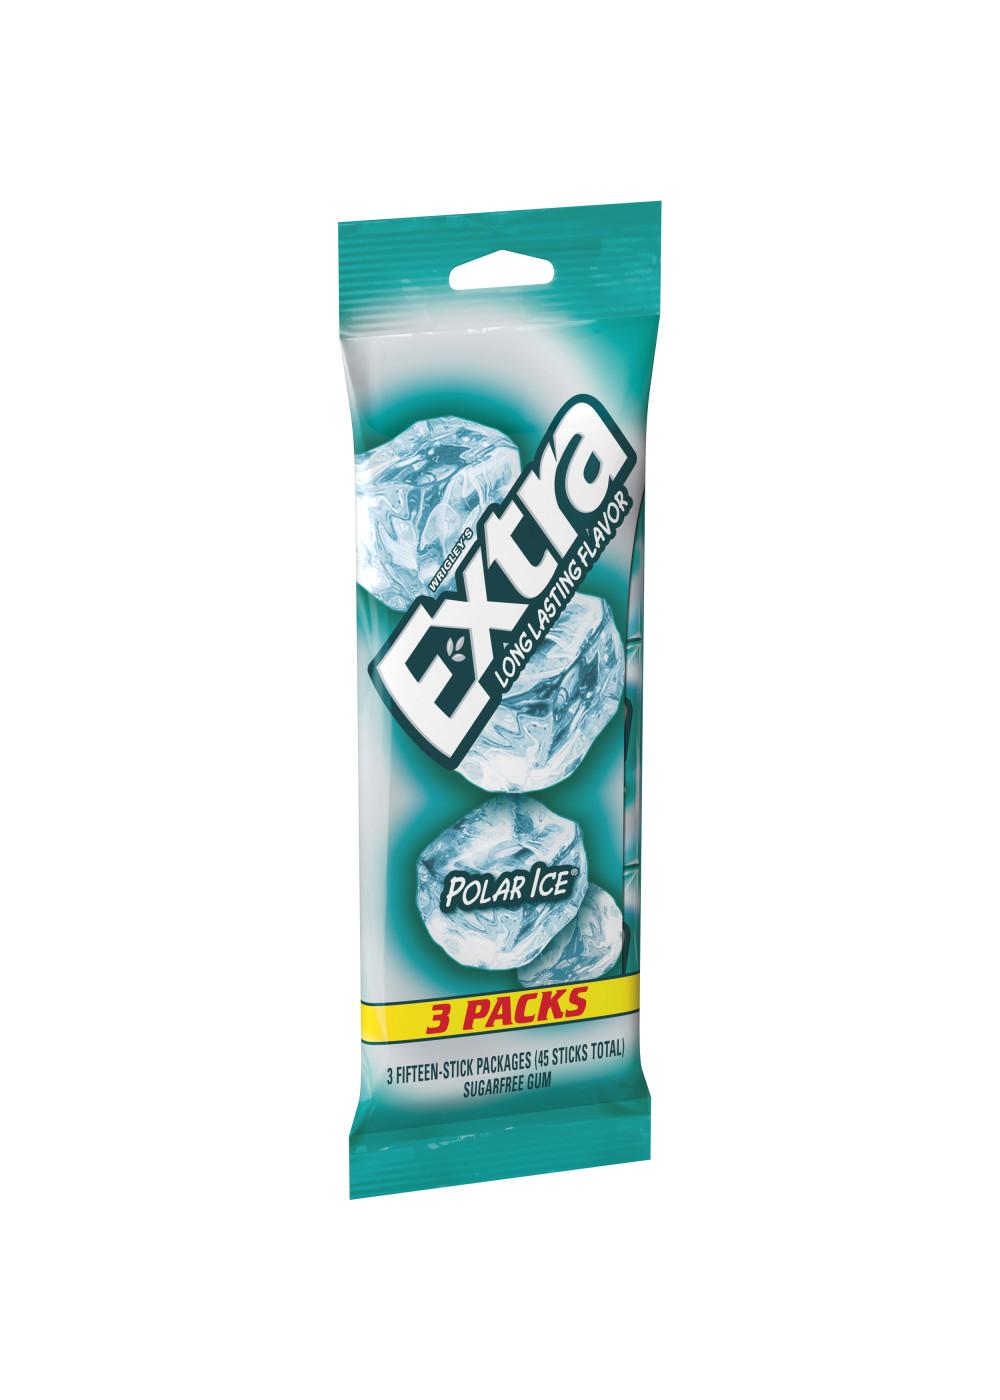 Extra Polar Ice Sugar Free Gum; image 1 of 7